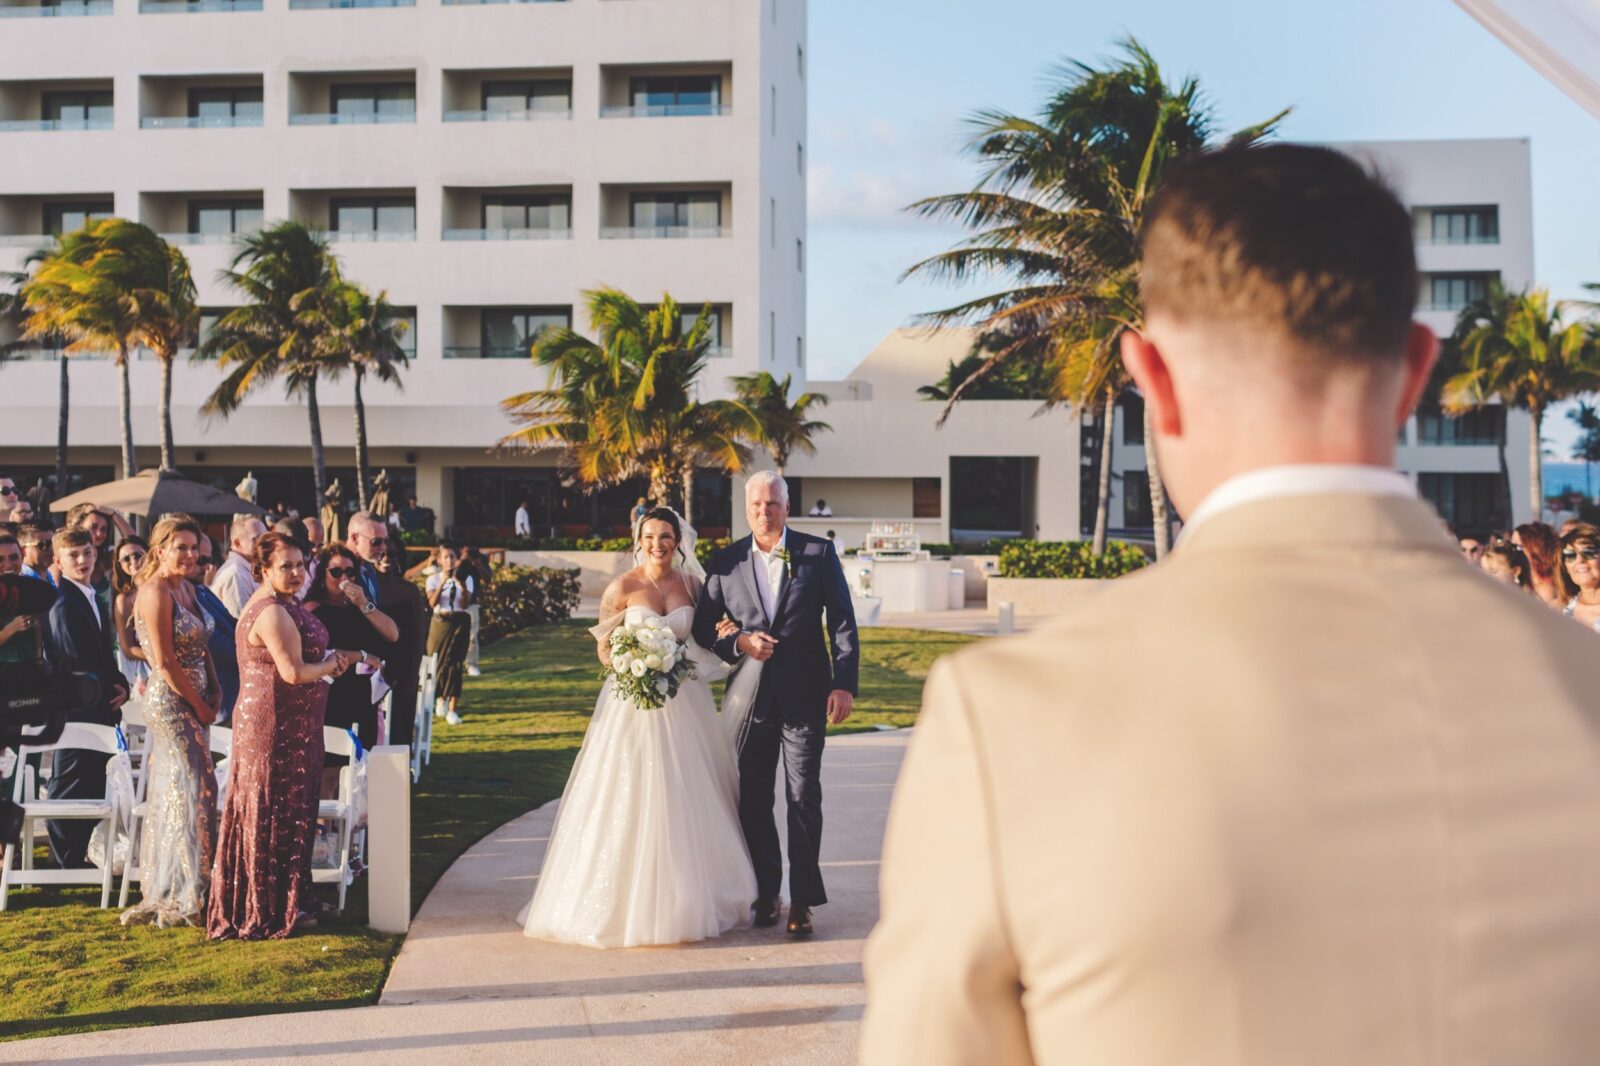 Bride walking down aisle at wedding in Cancun. 